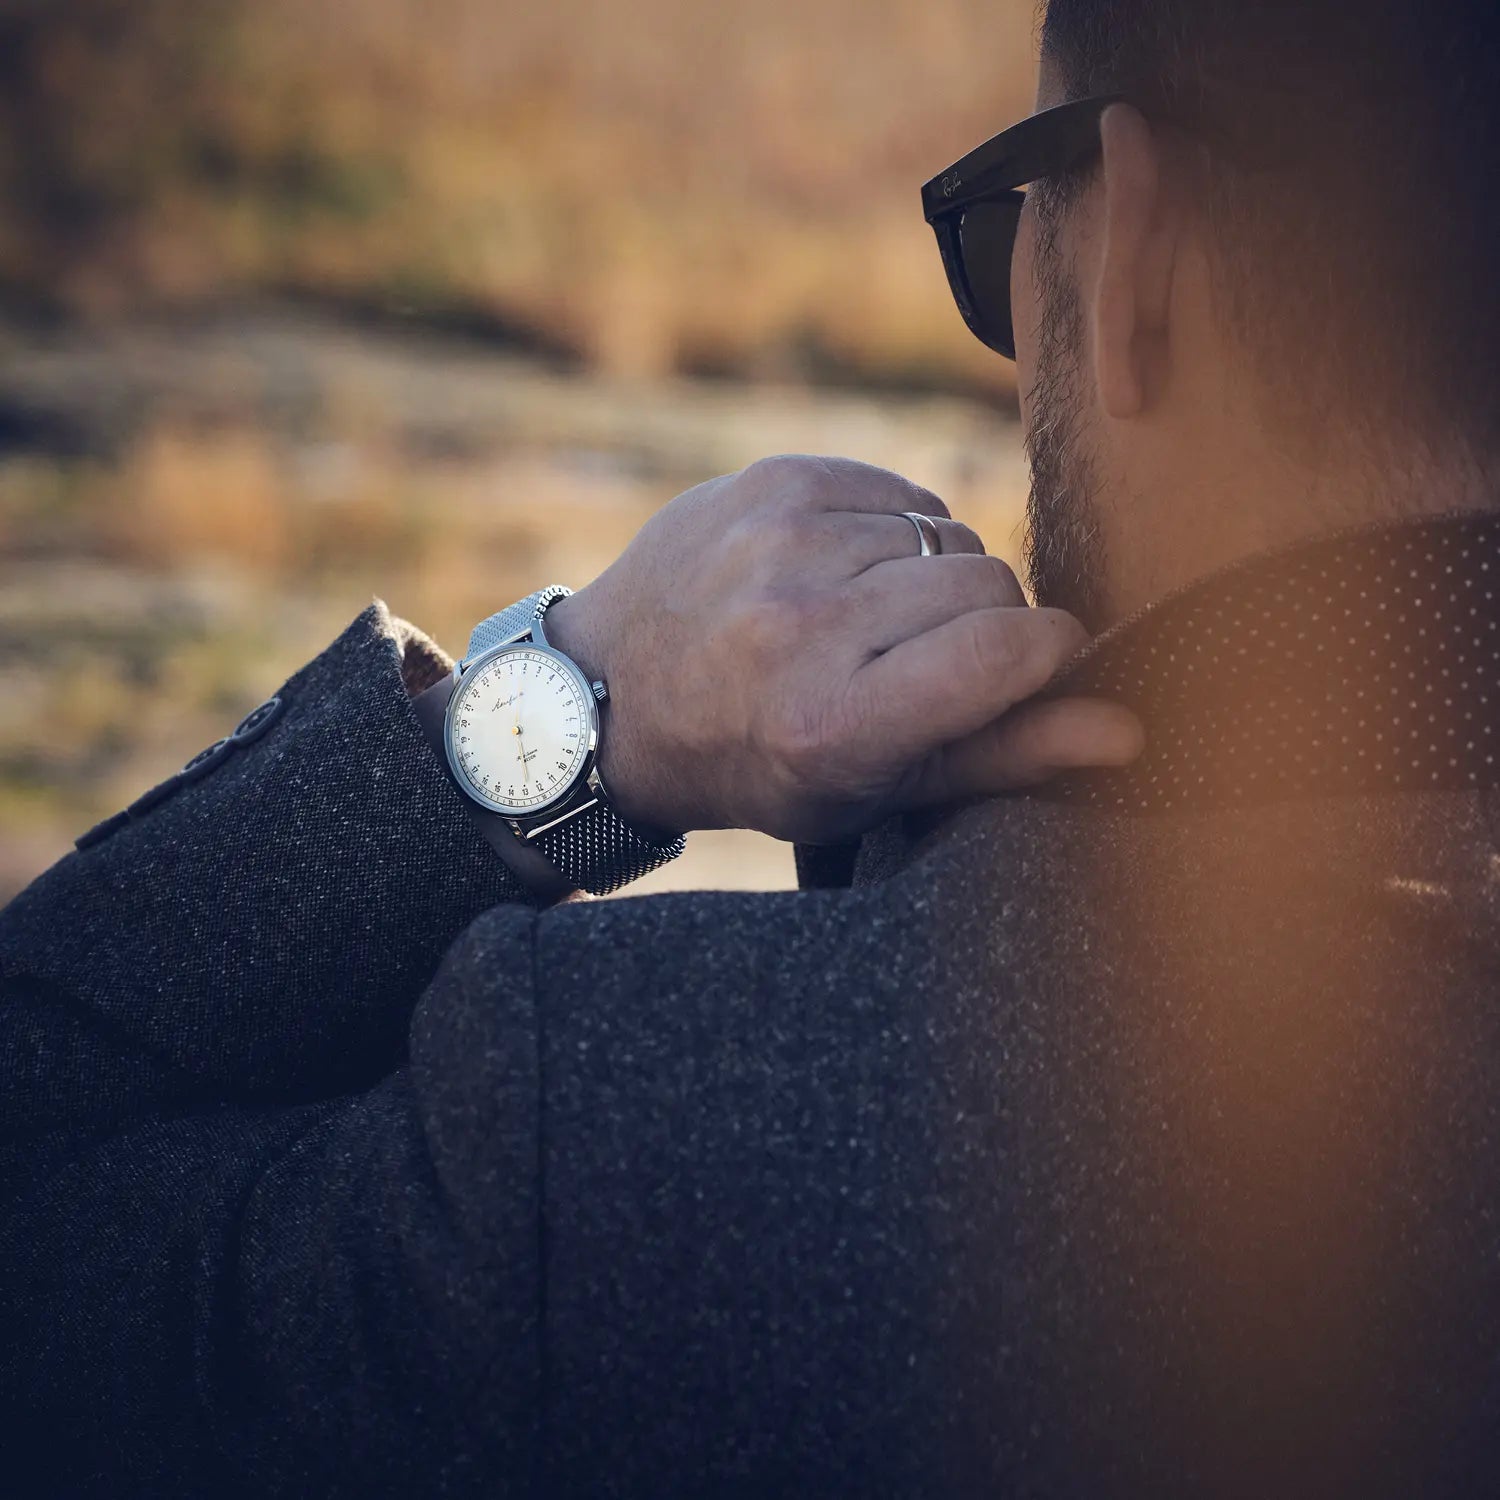 Akerfalk First season 24-hour watch with mesh strap worn by a man in blazer